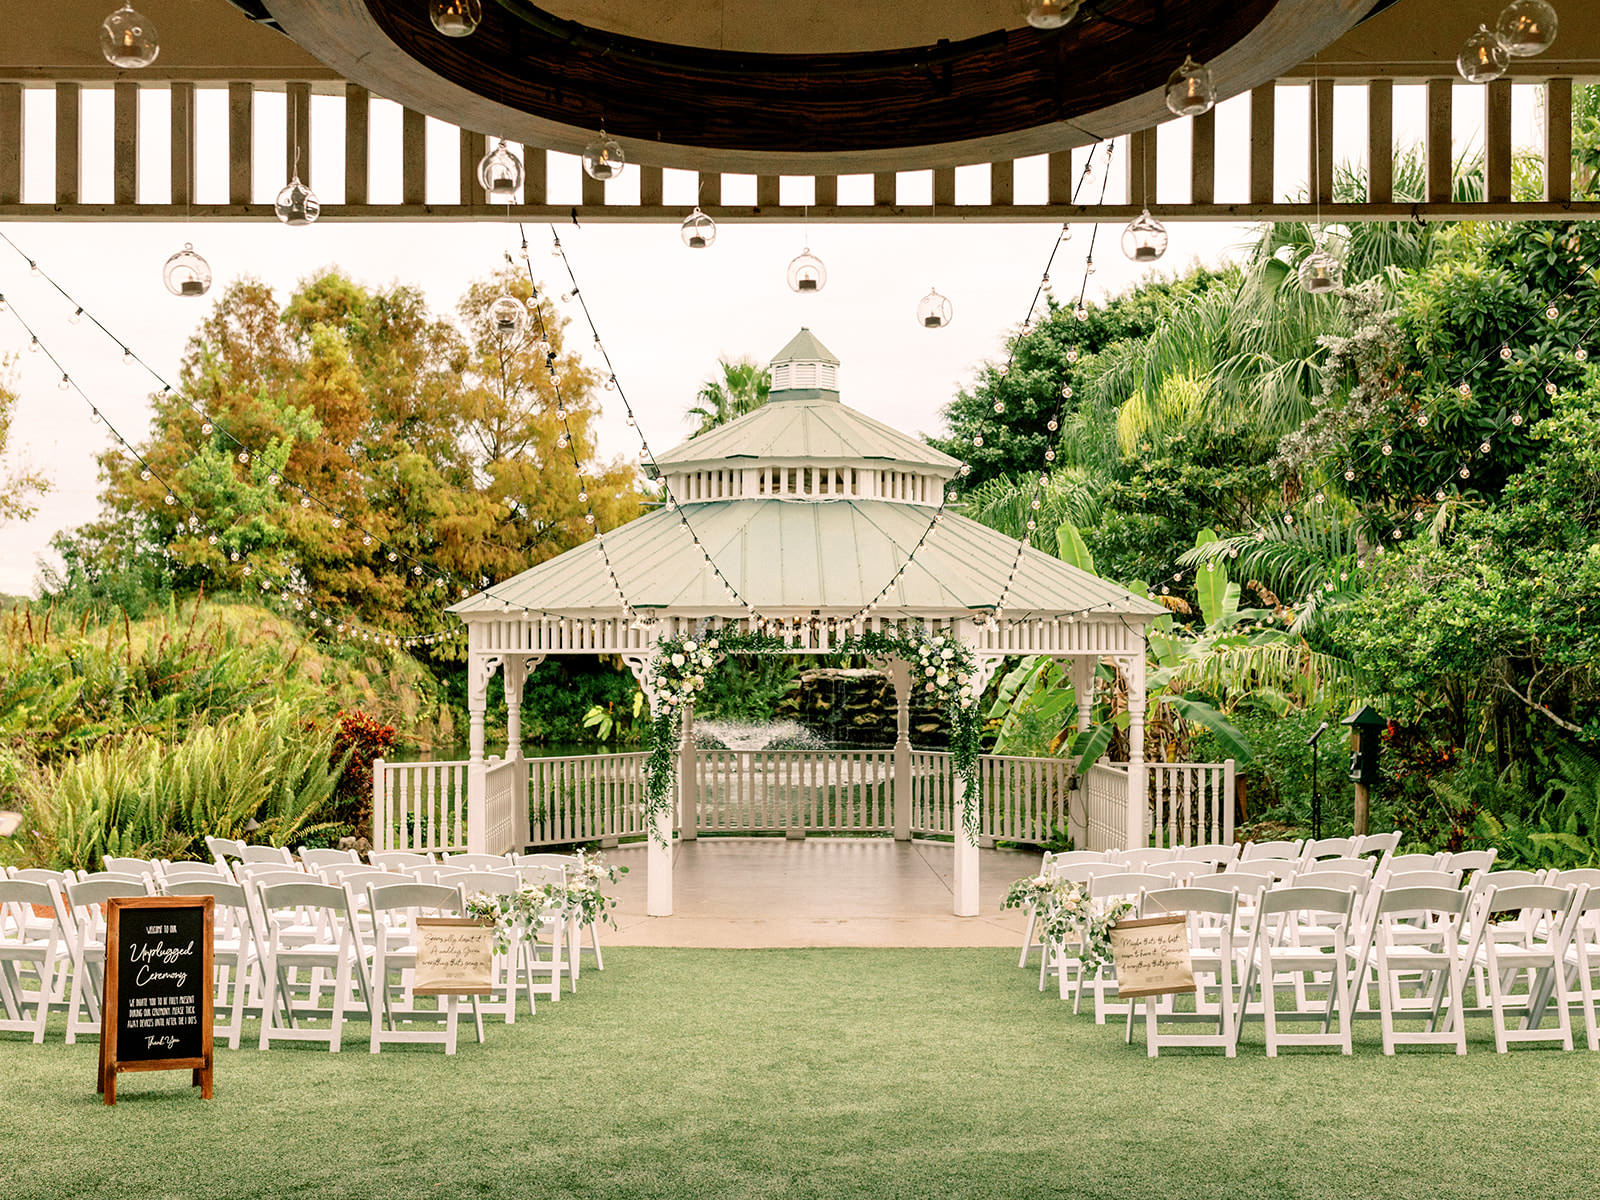 Outdoor Gazedo Wedding Ceremony | White Garden Chairs | Unplugged Ceremony A-Frame Sign